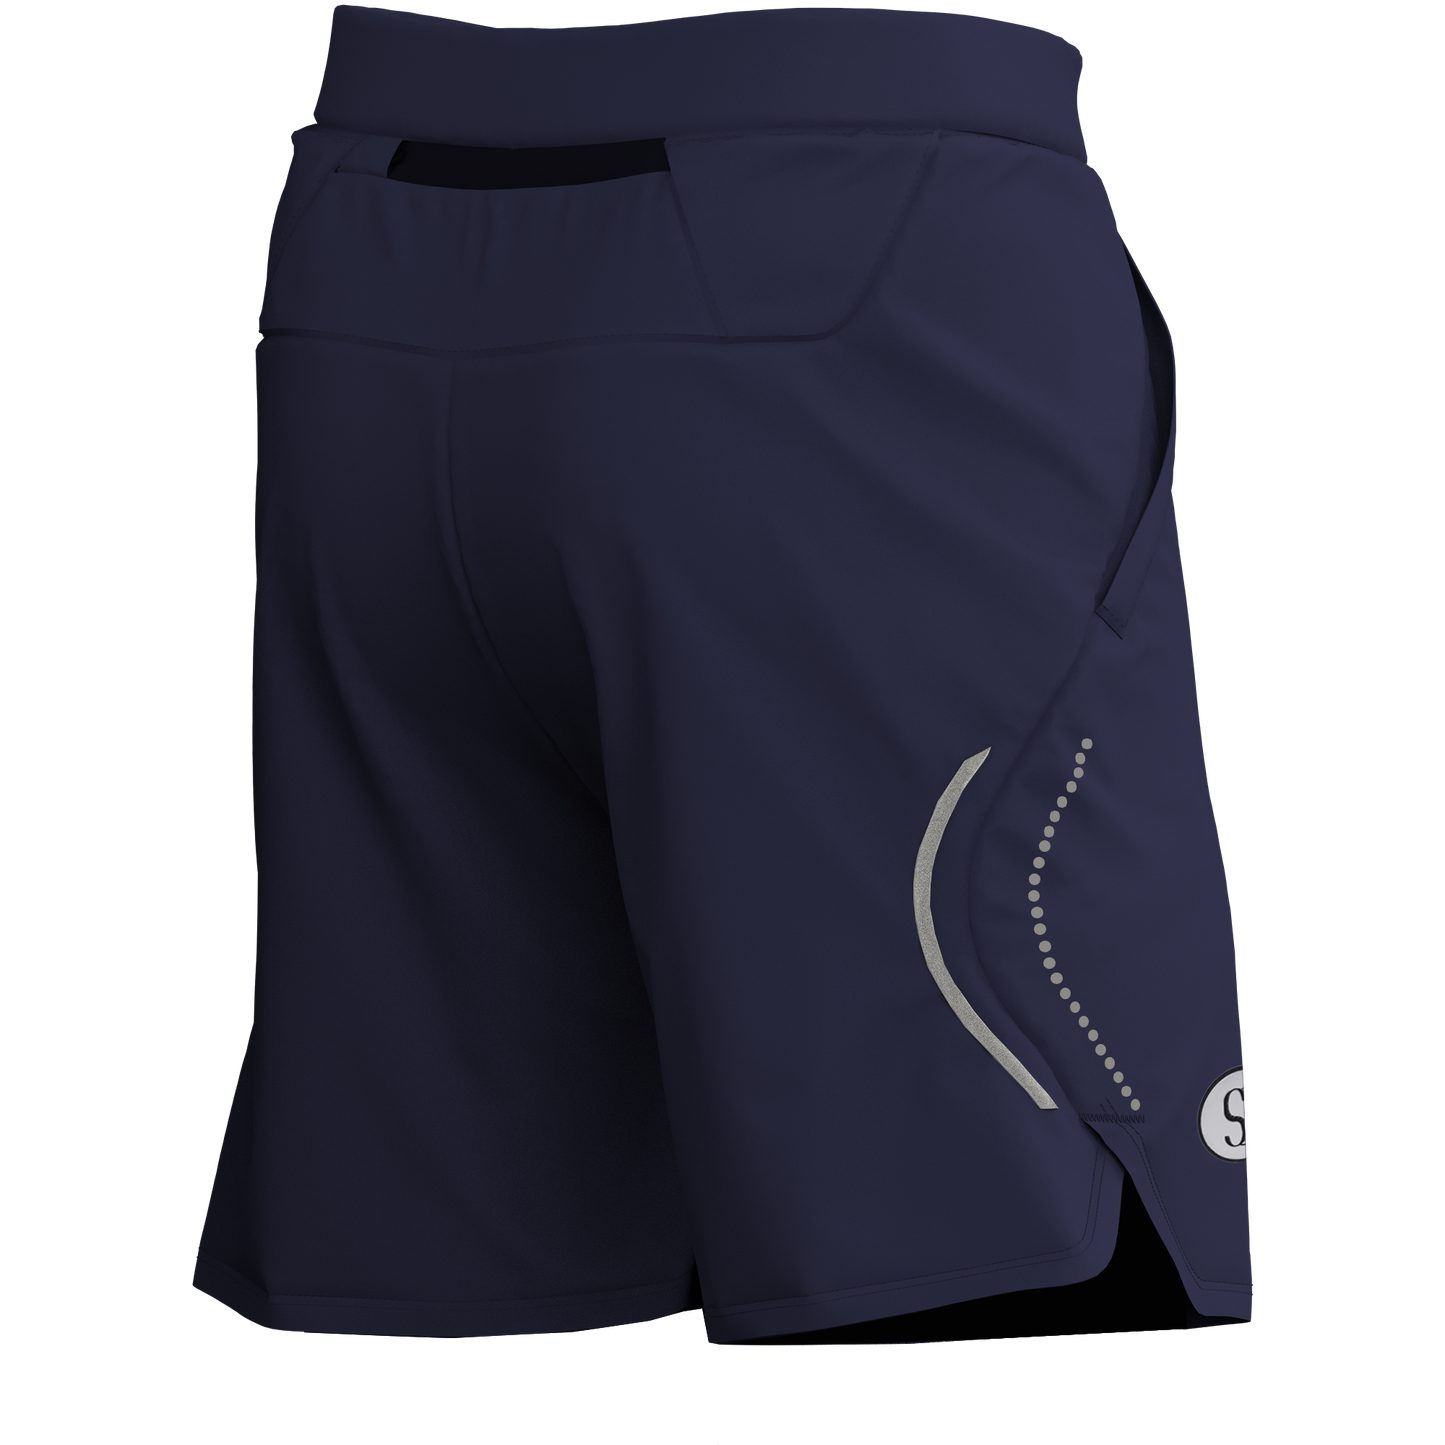 Men's Navy Blue Sports Shorts for Running & Gym